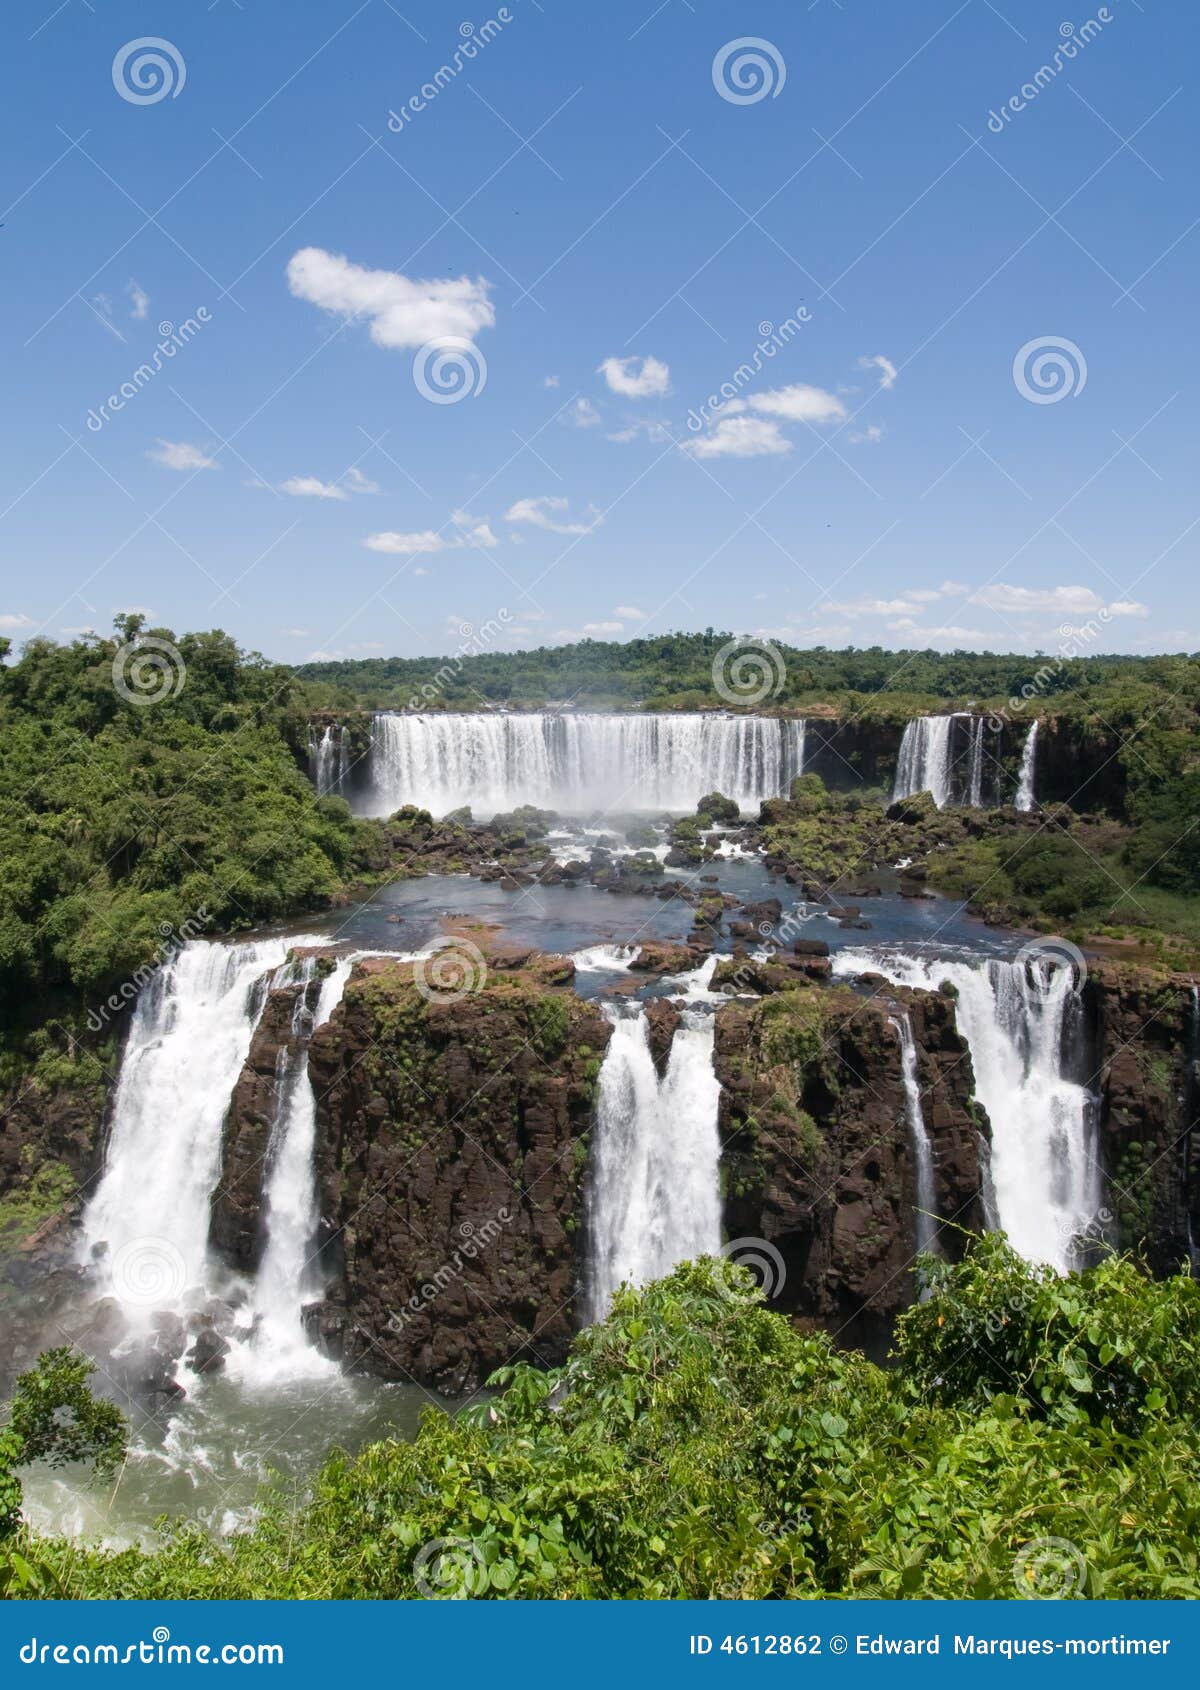 iguassu falls, brazil.